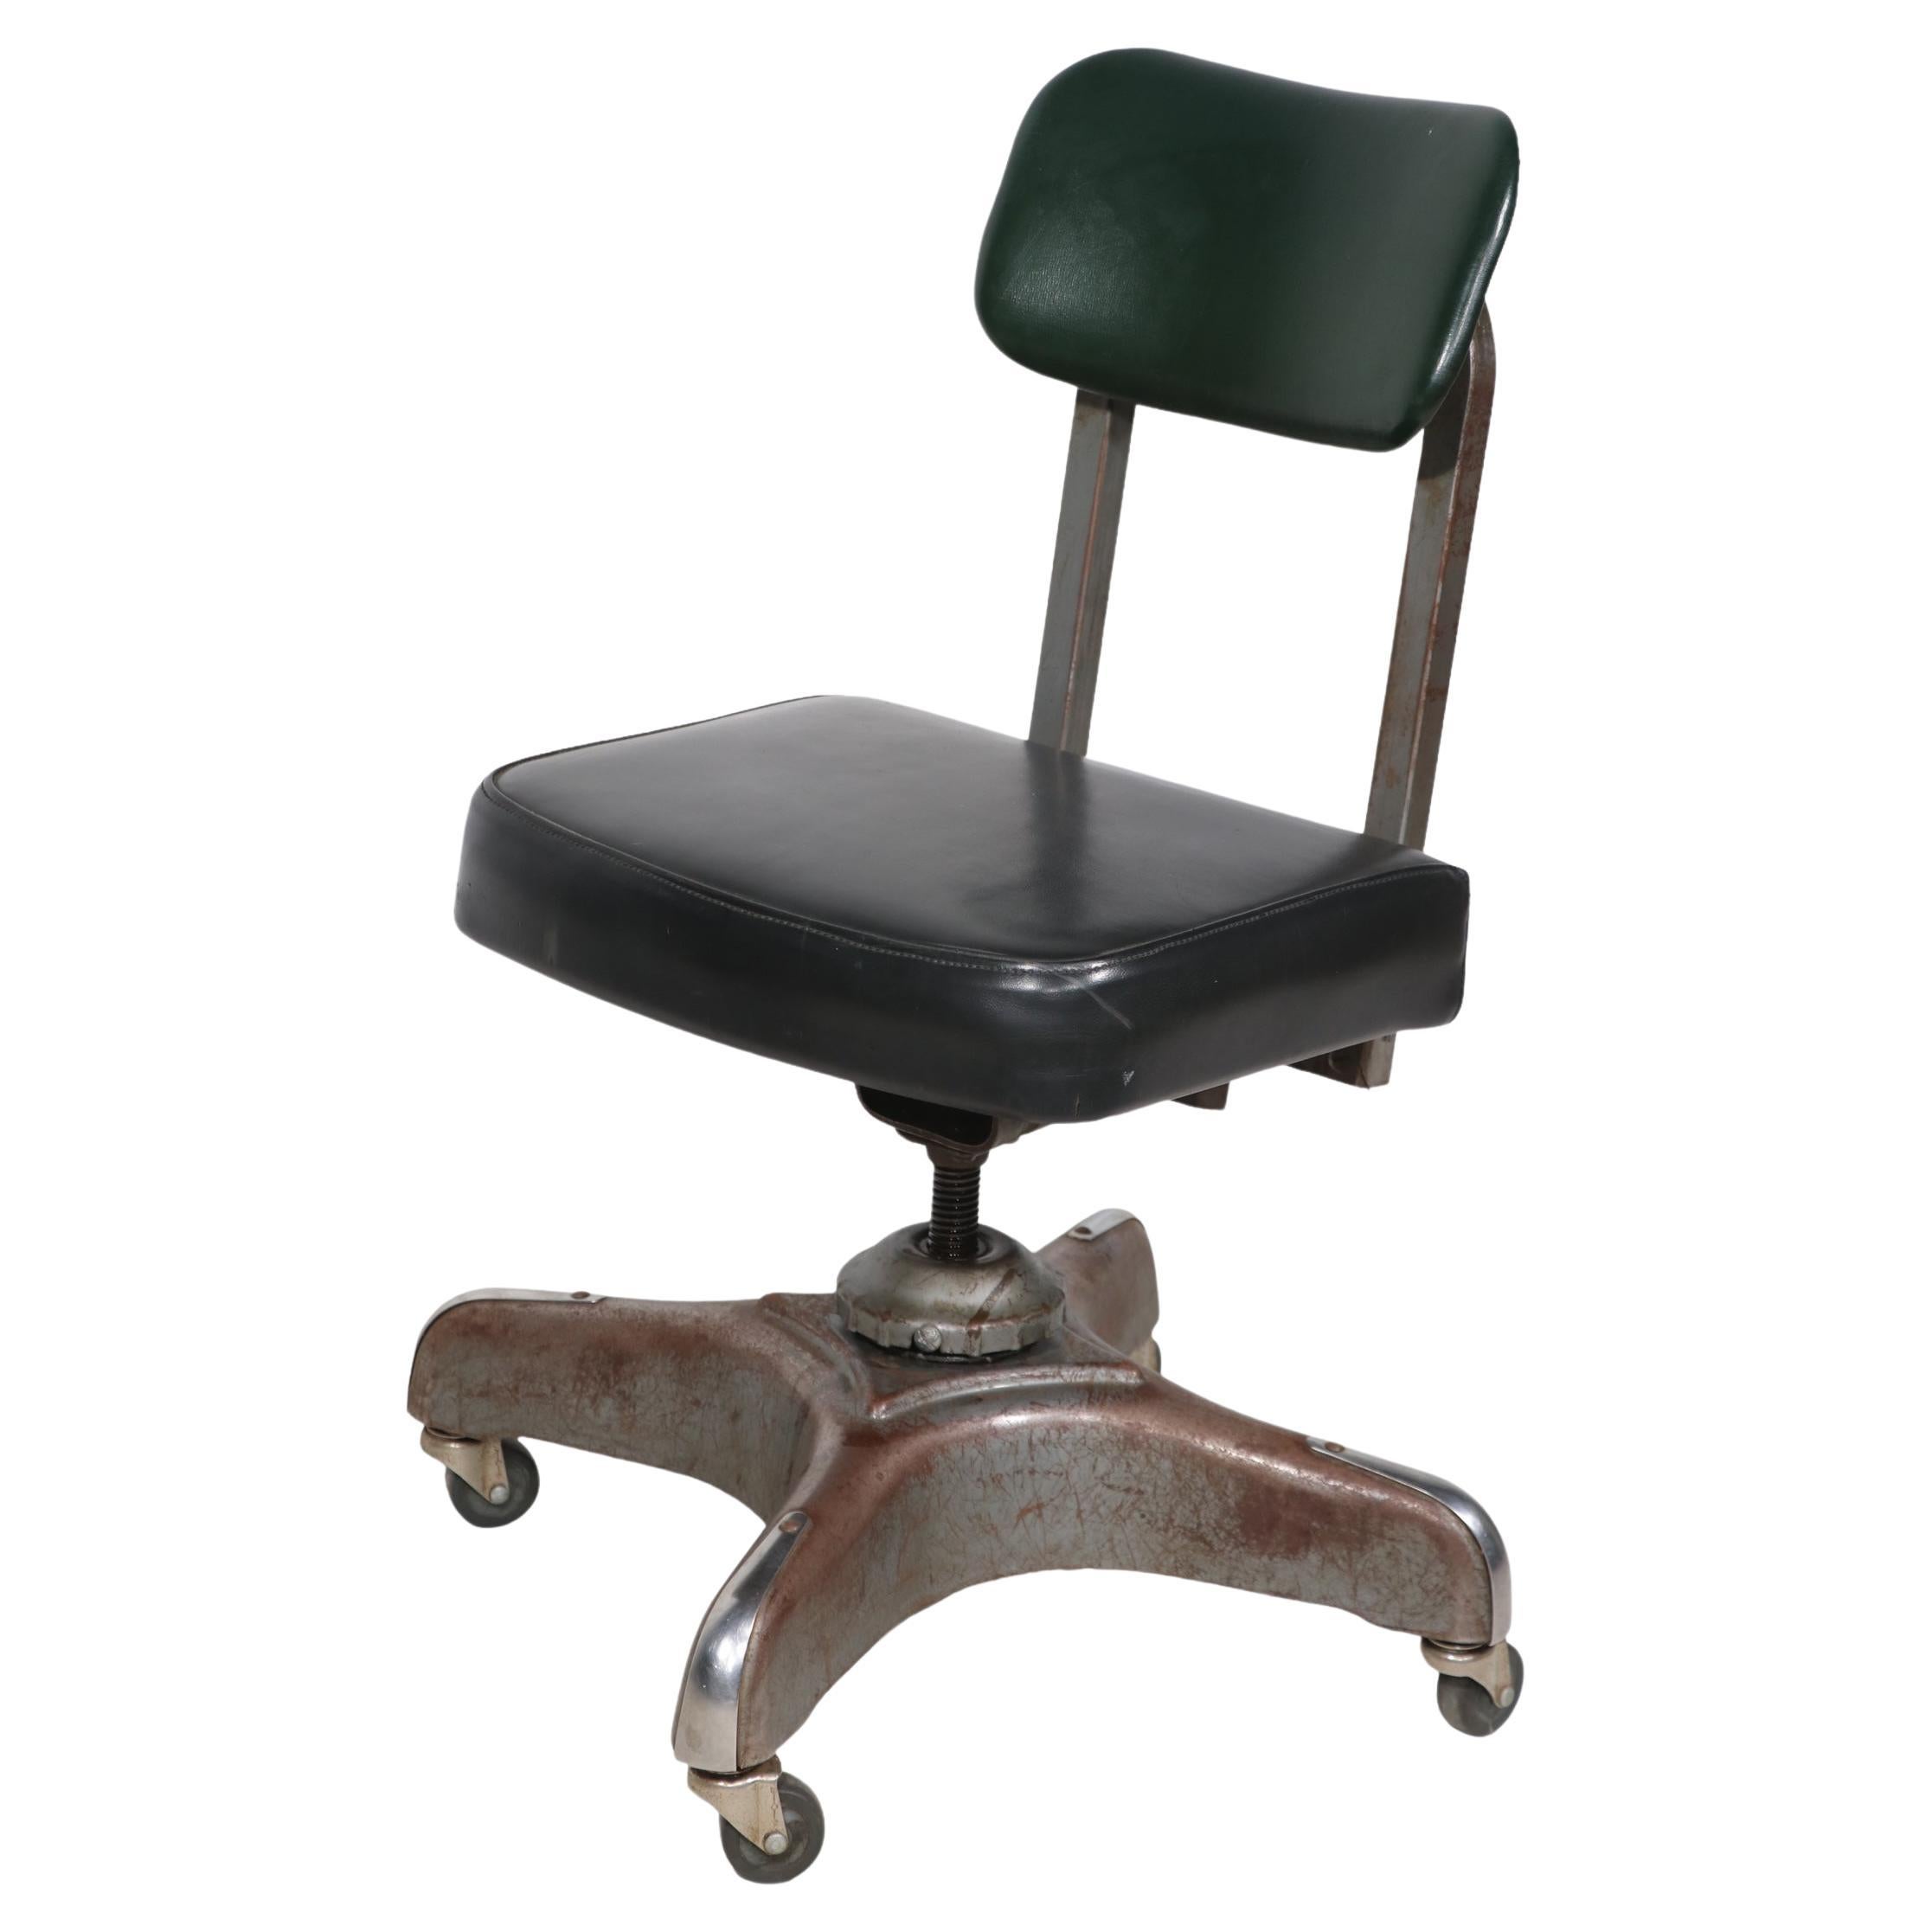 Art Deco Industrial Swivel Tilt Armless Desk Chair by Harter Corporation 1930/40 For Sale